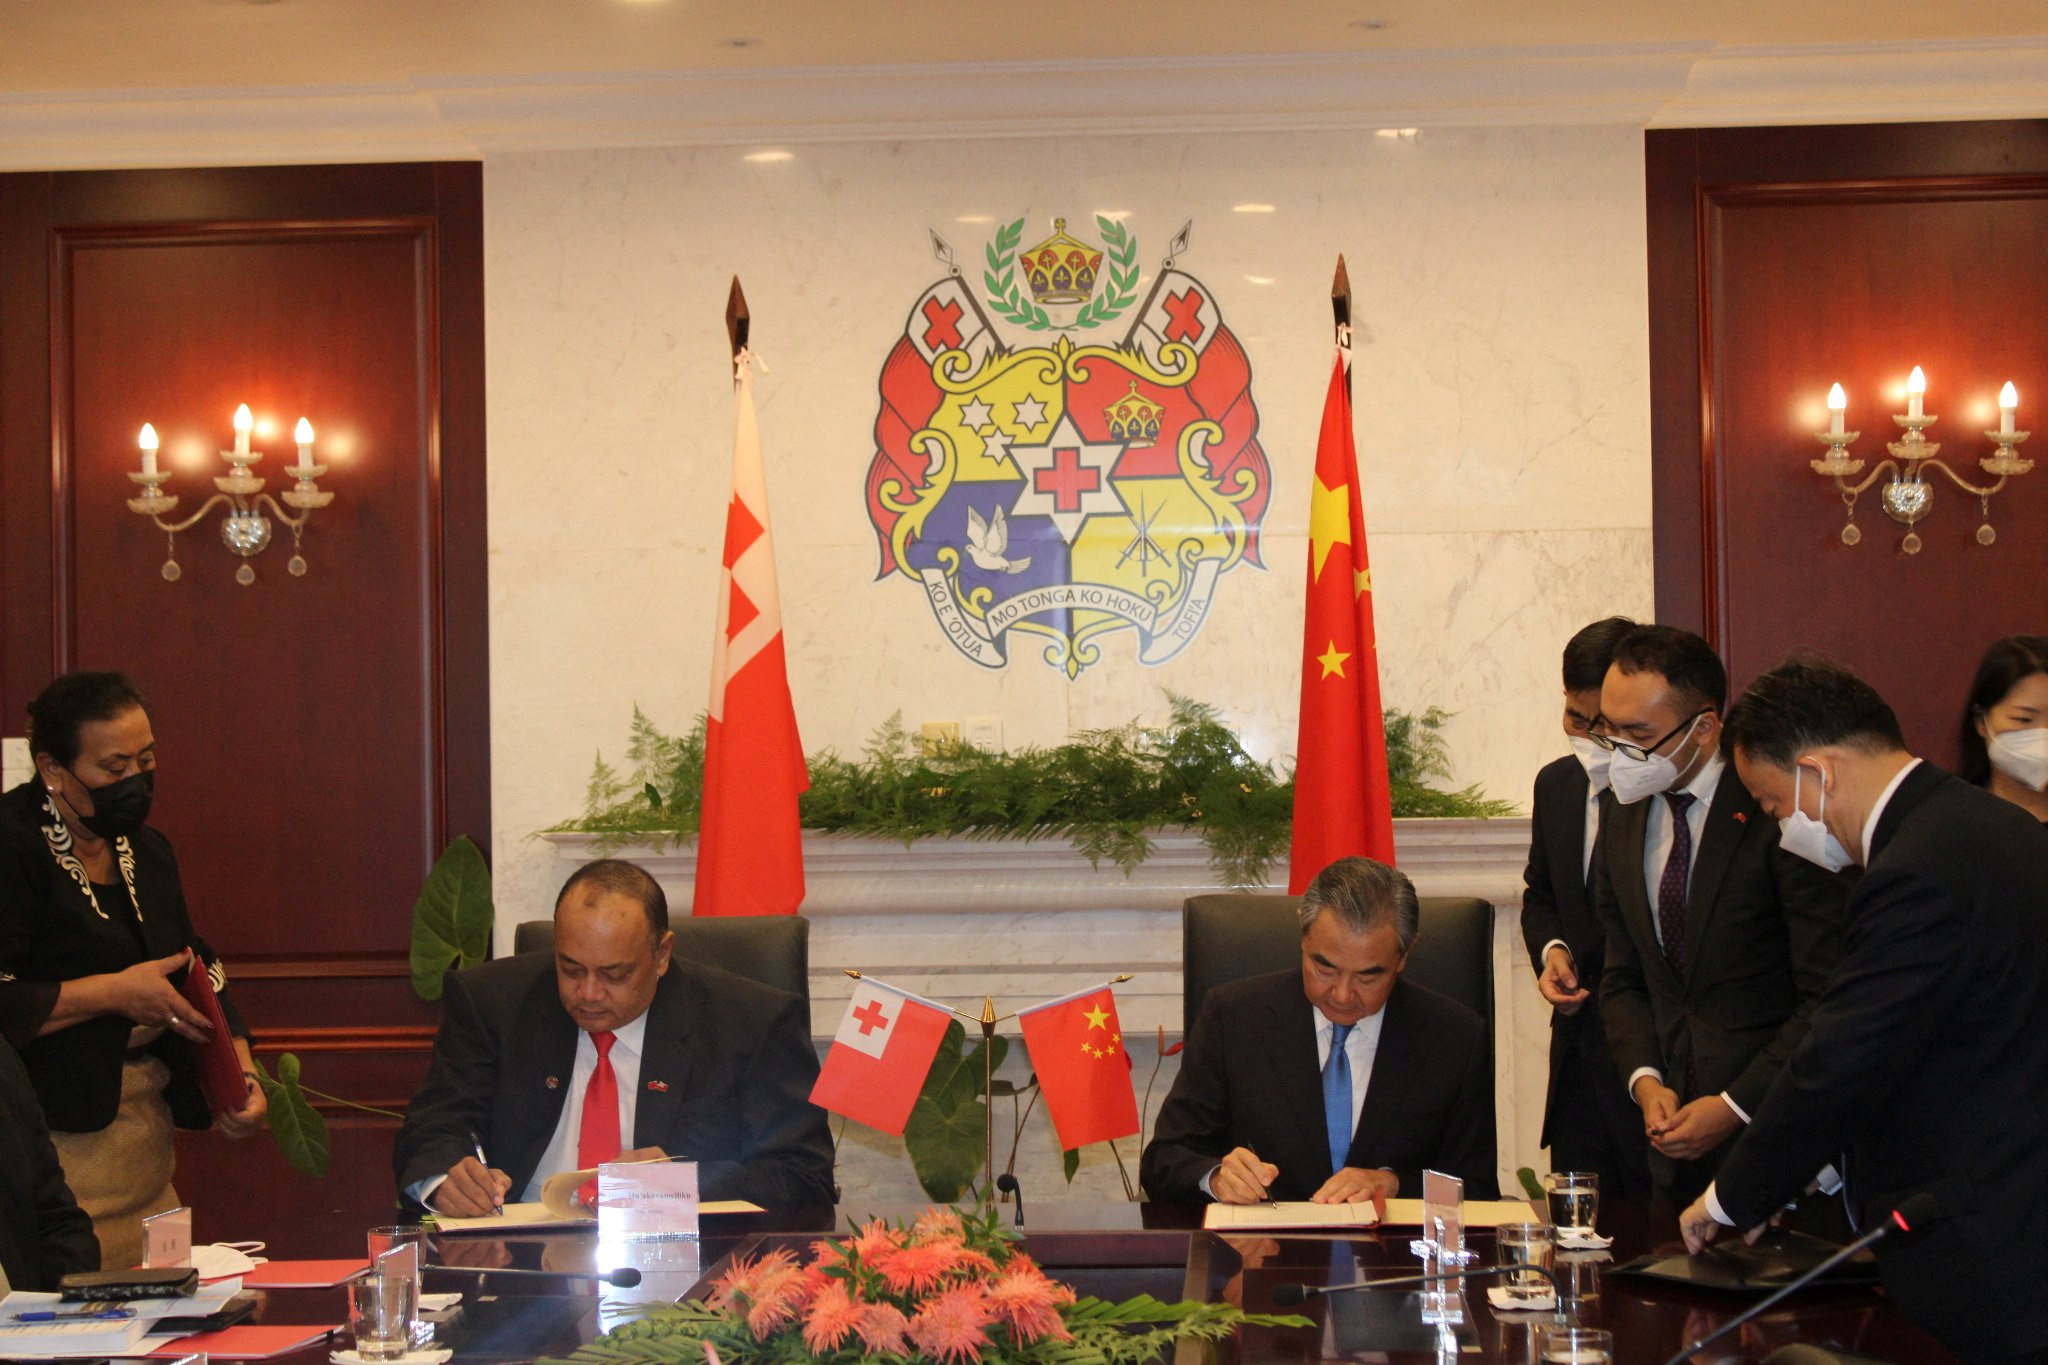 China's Foreign Minister Wang Yi visits Tonga